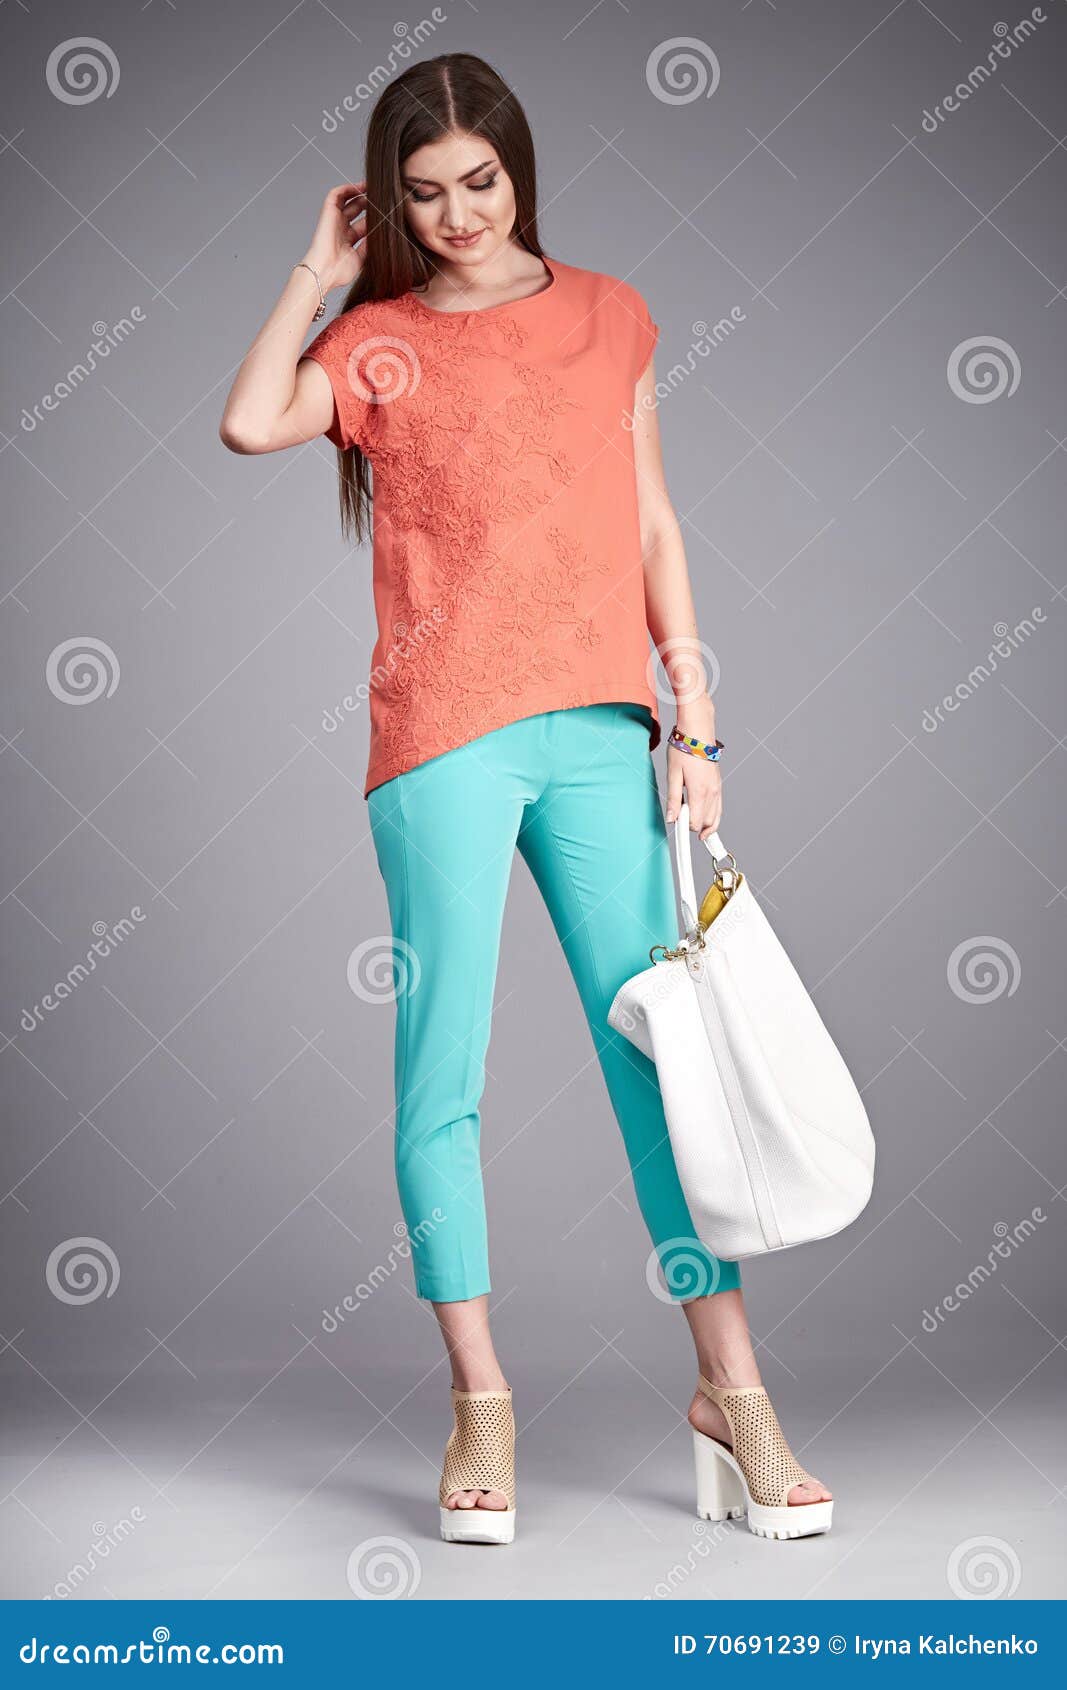 Beauty Woman Wear Stylish Casual Clothing Stock Image - Image of